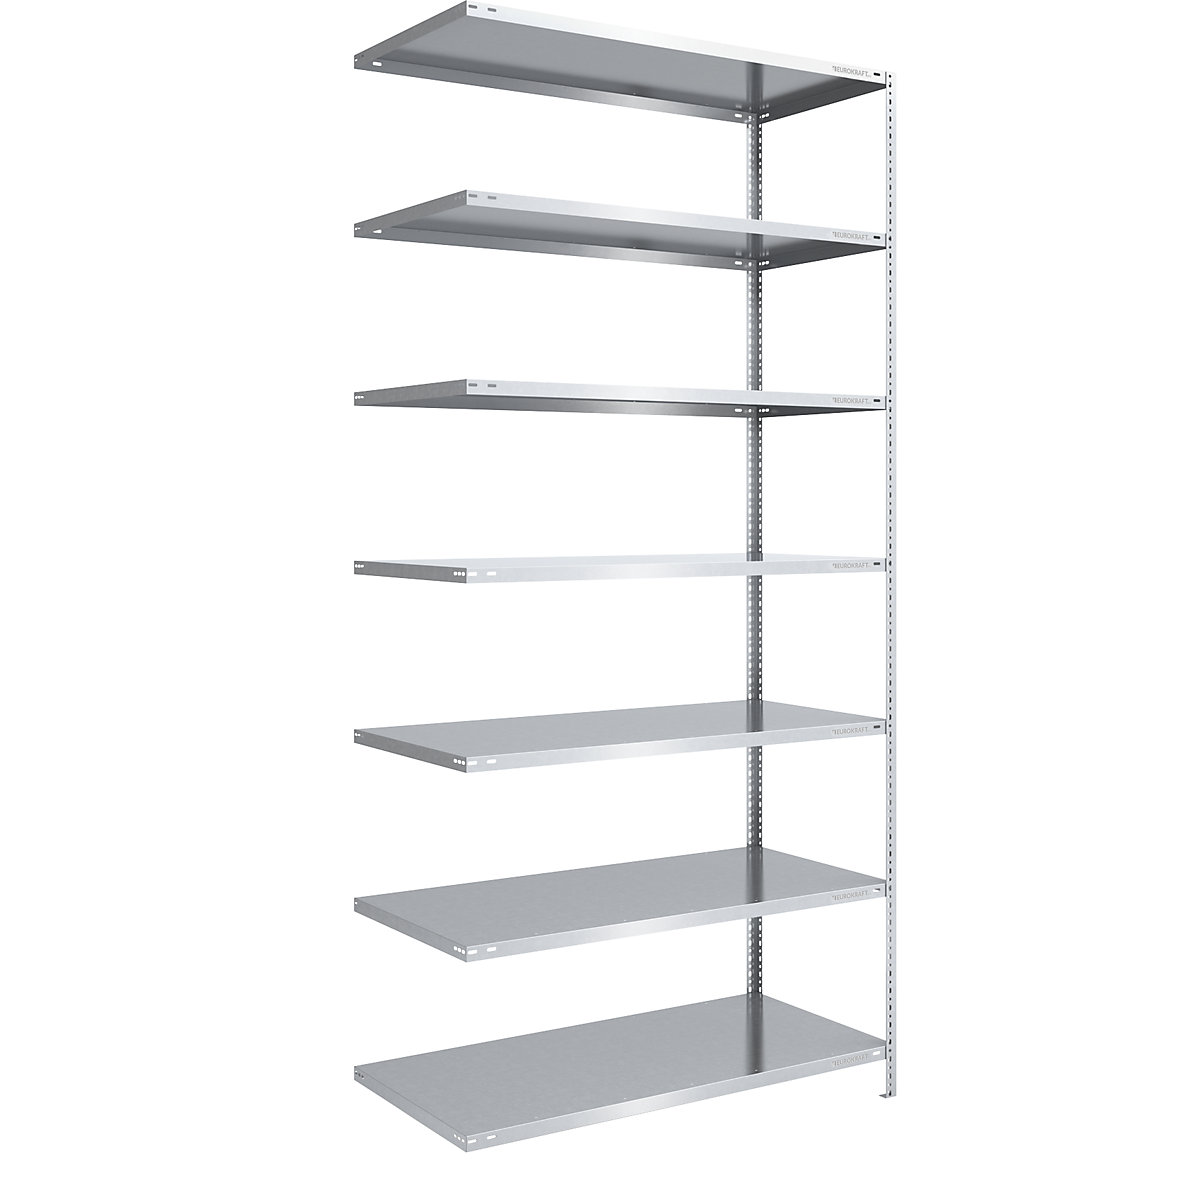 Bolt-together storage shelving, zinc plated, medium duty – eurokraft pro, shelf unit height 3000 mm, shelf width 1300 mm, depth 800 mm, extension shelf unit-13